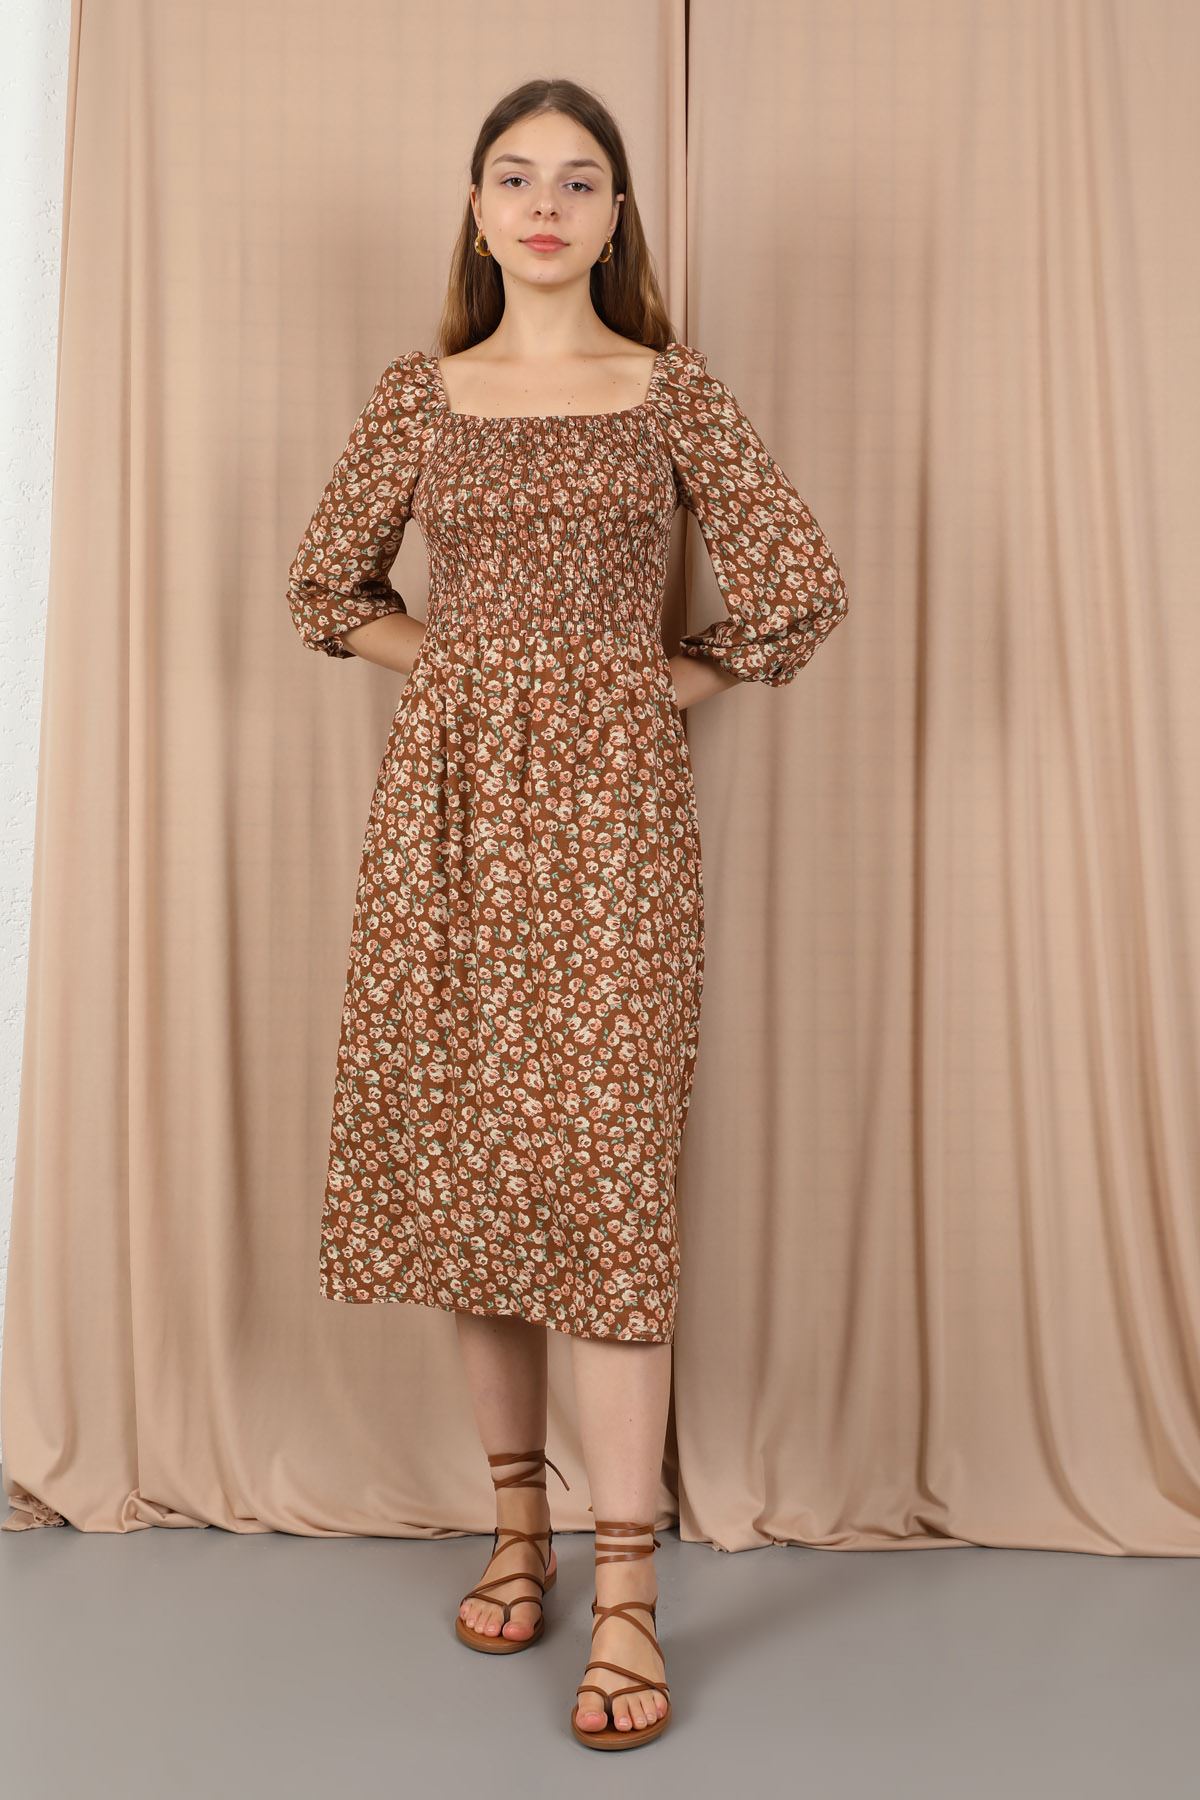 Square Neckline Tight Fit Floral Print Women Dress - Brown